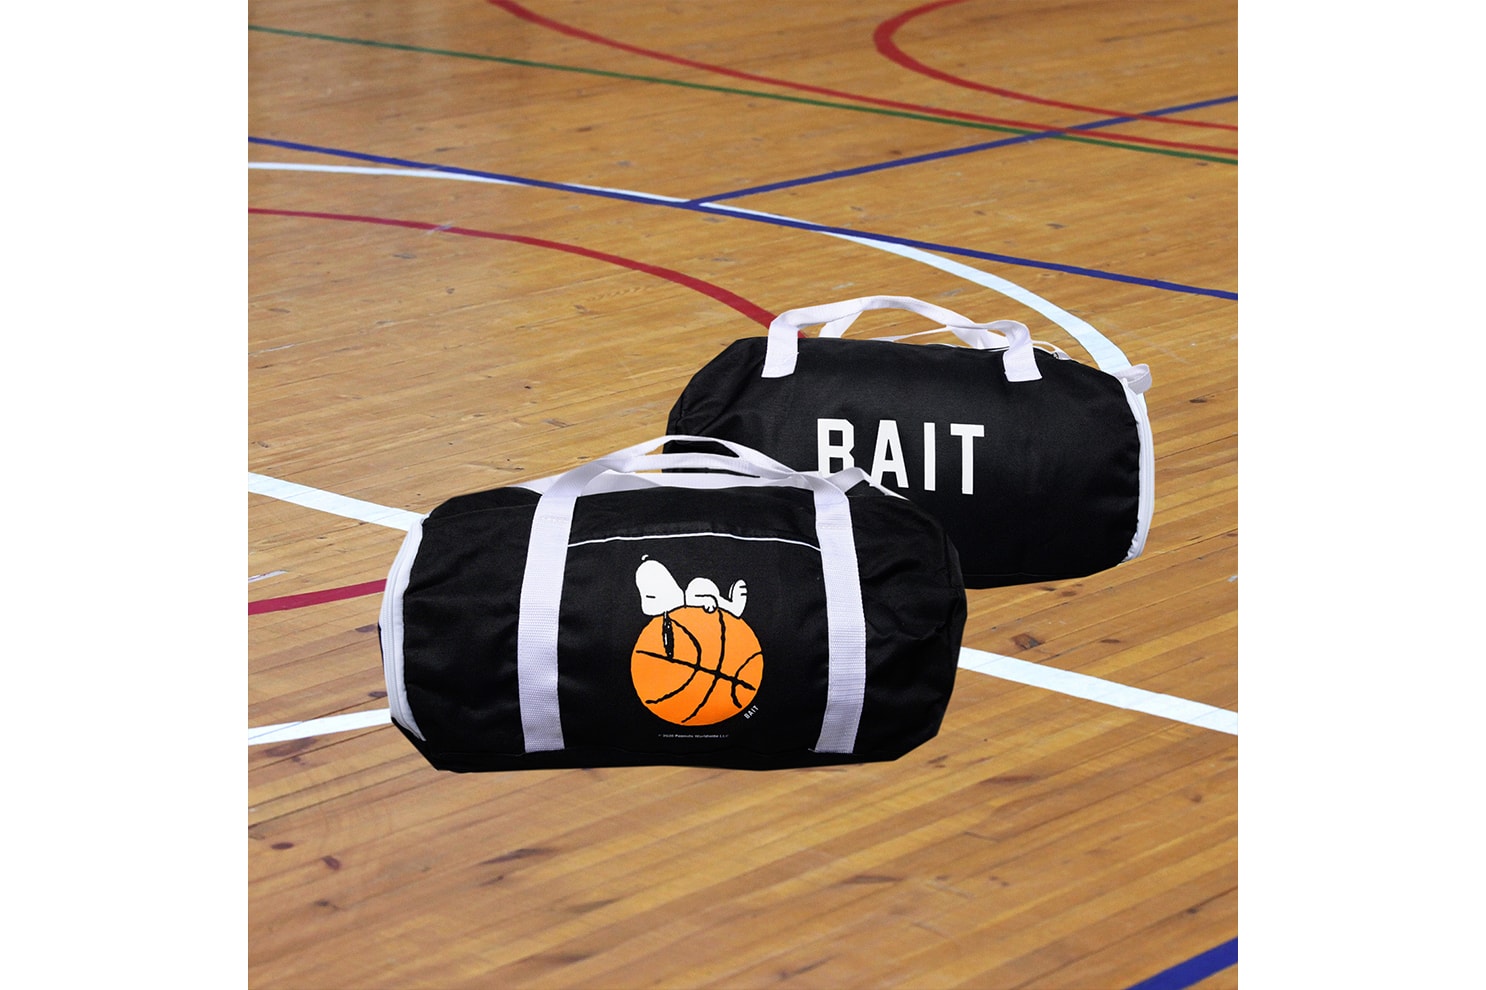 BAIT x Peanuts Basketball Collection NbA LAKERS basketball PEANUTS cartoon Charles M. Schulz